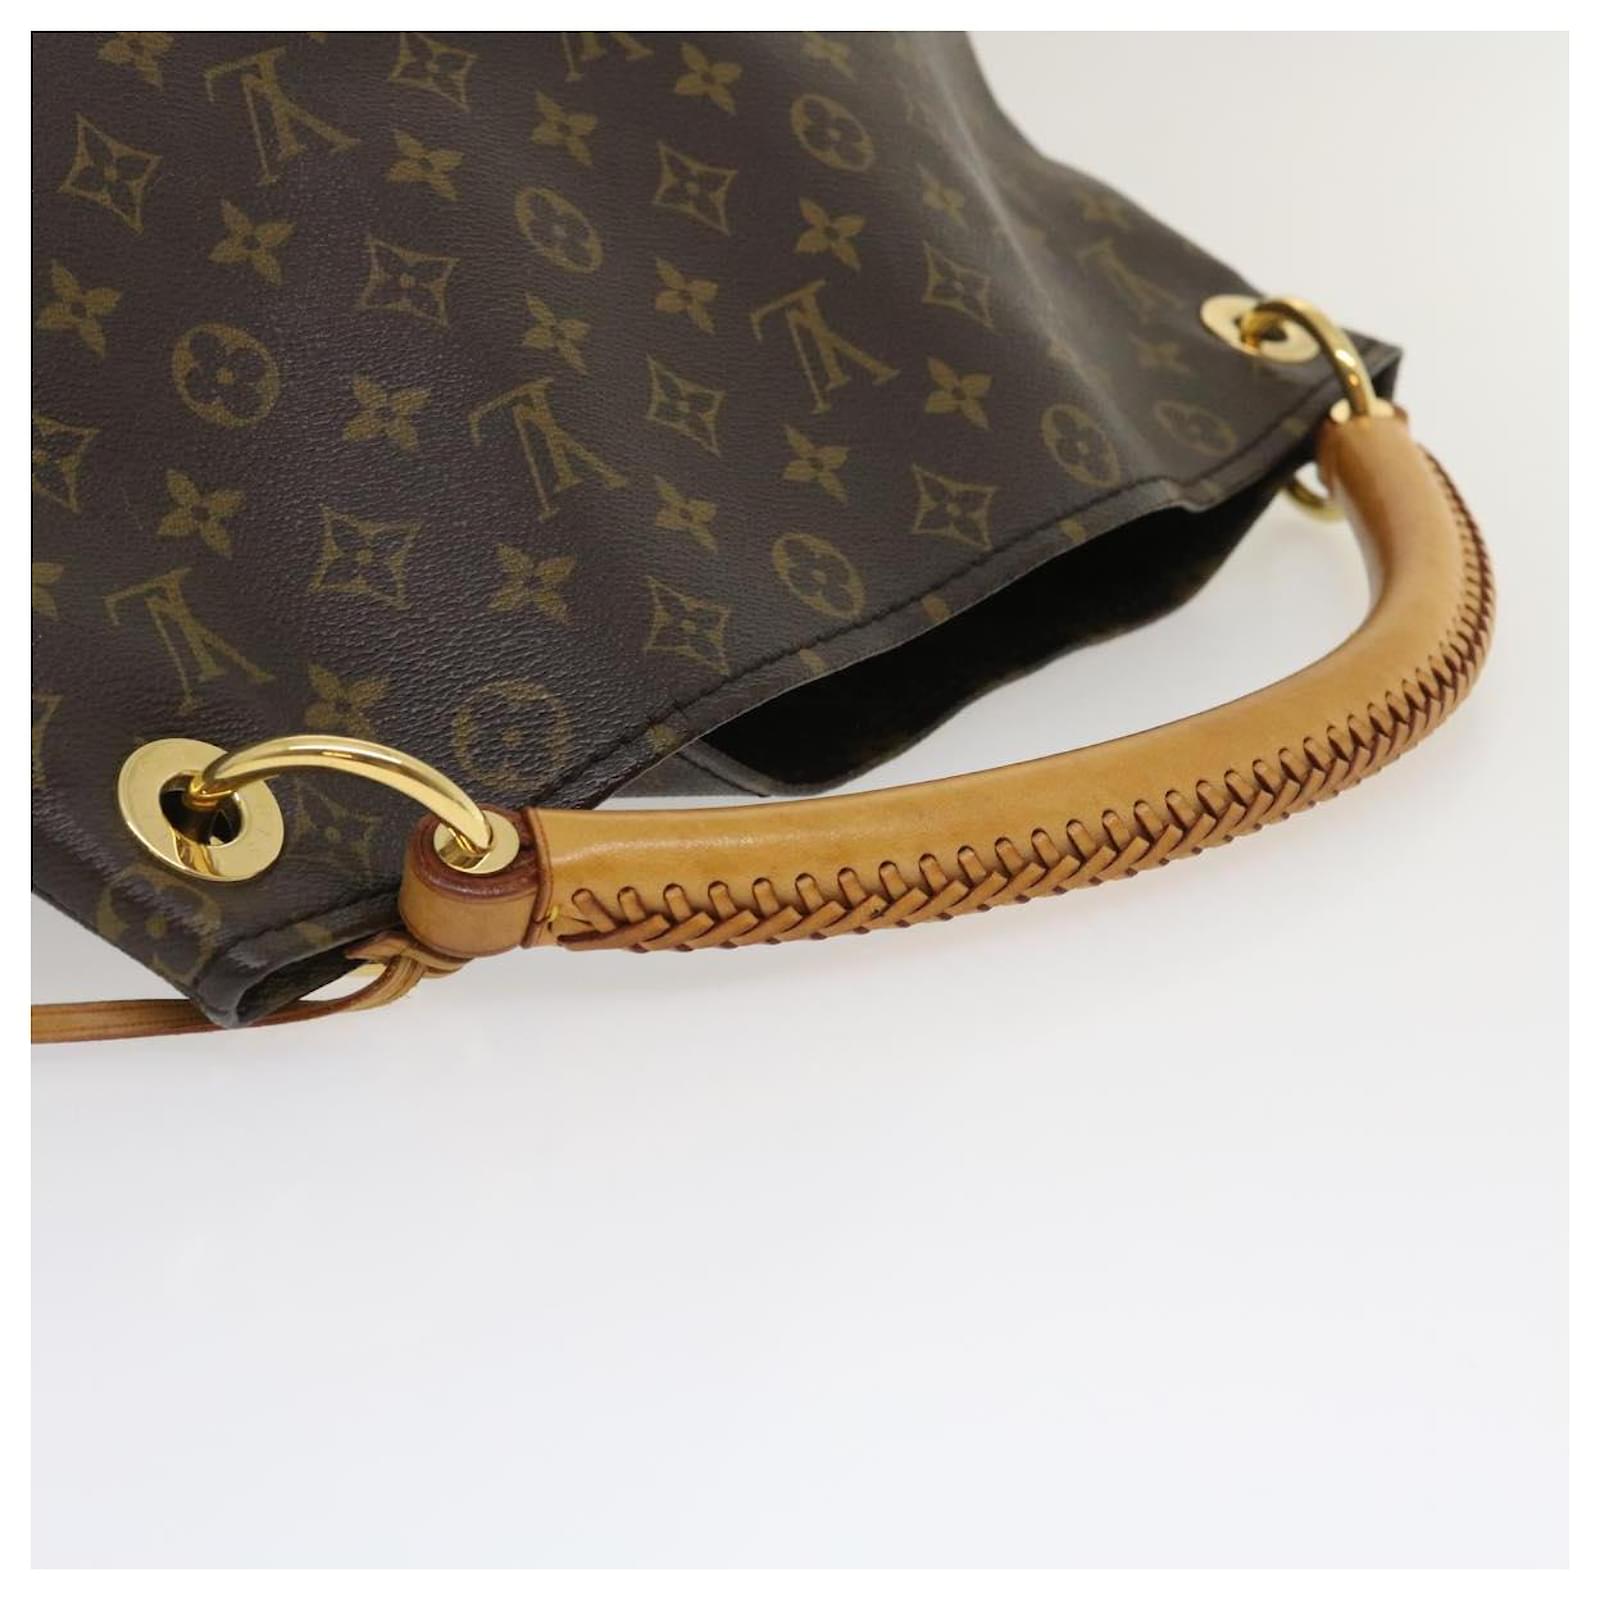 Louis Vuitton Monogram Canvas Artsy MM Handbag Article:M40249 Made